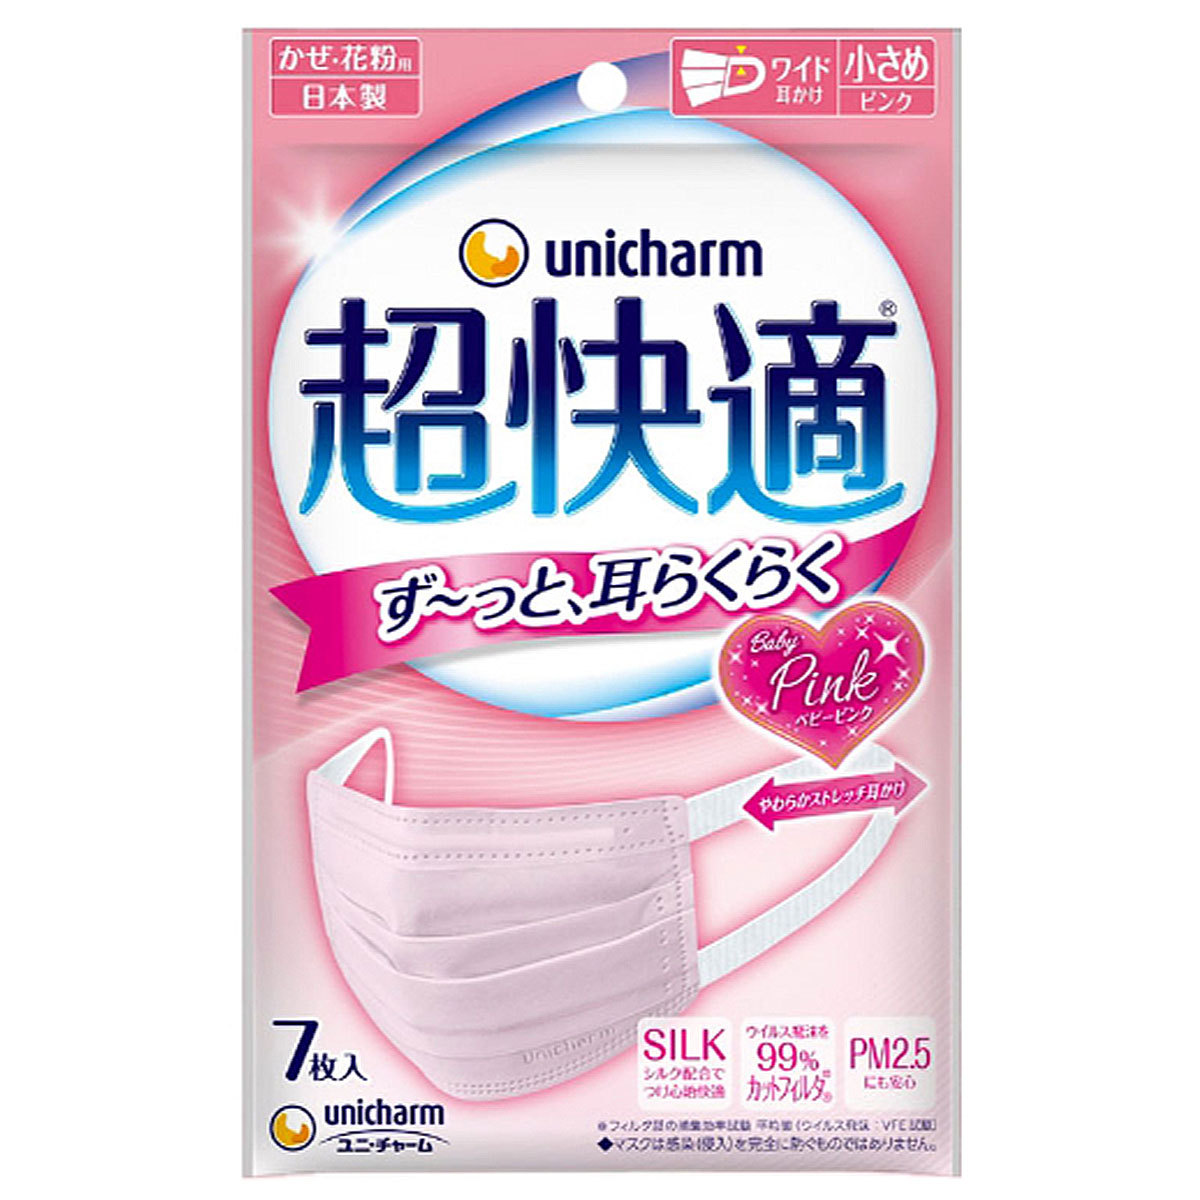 unicharm unicharm 超快適マスク 小さめサイズ ピンク 7枚入×1個 超快適マスク 衛生用品マスクの商品画像